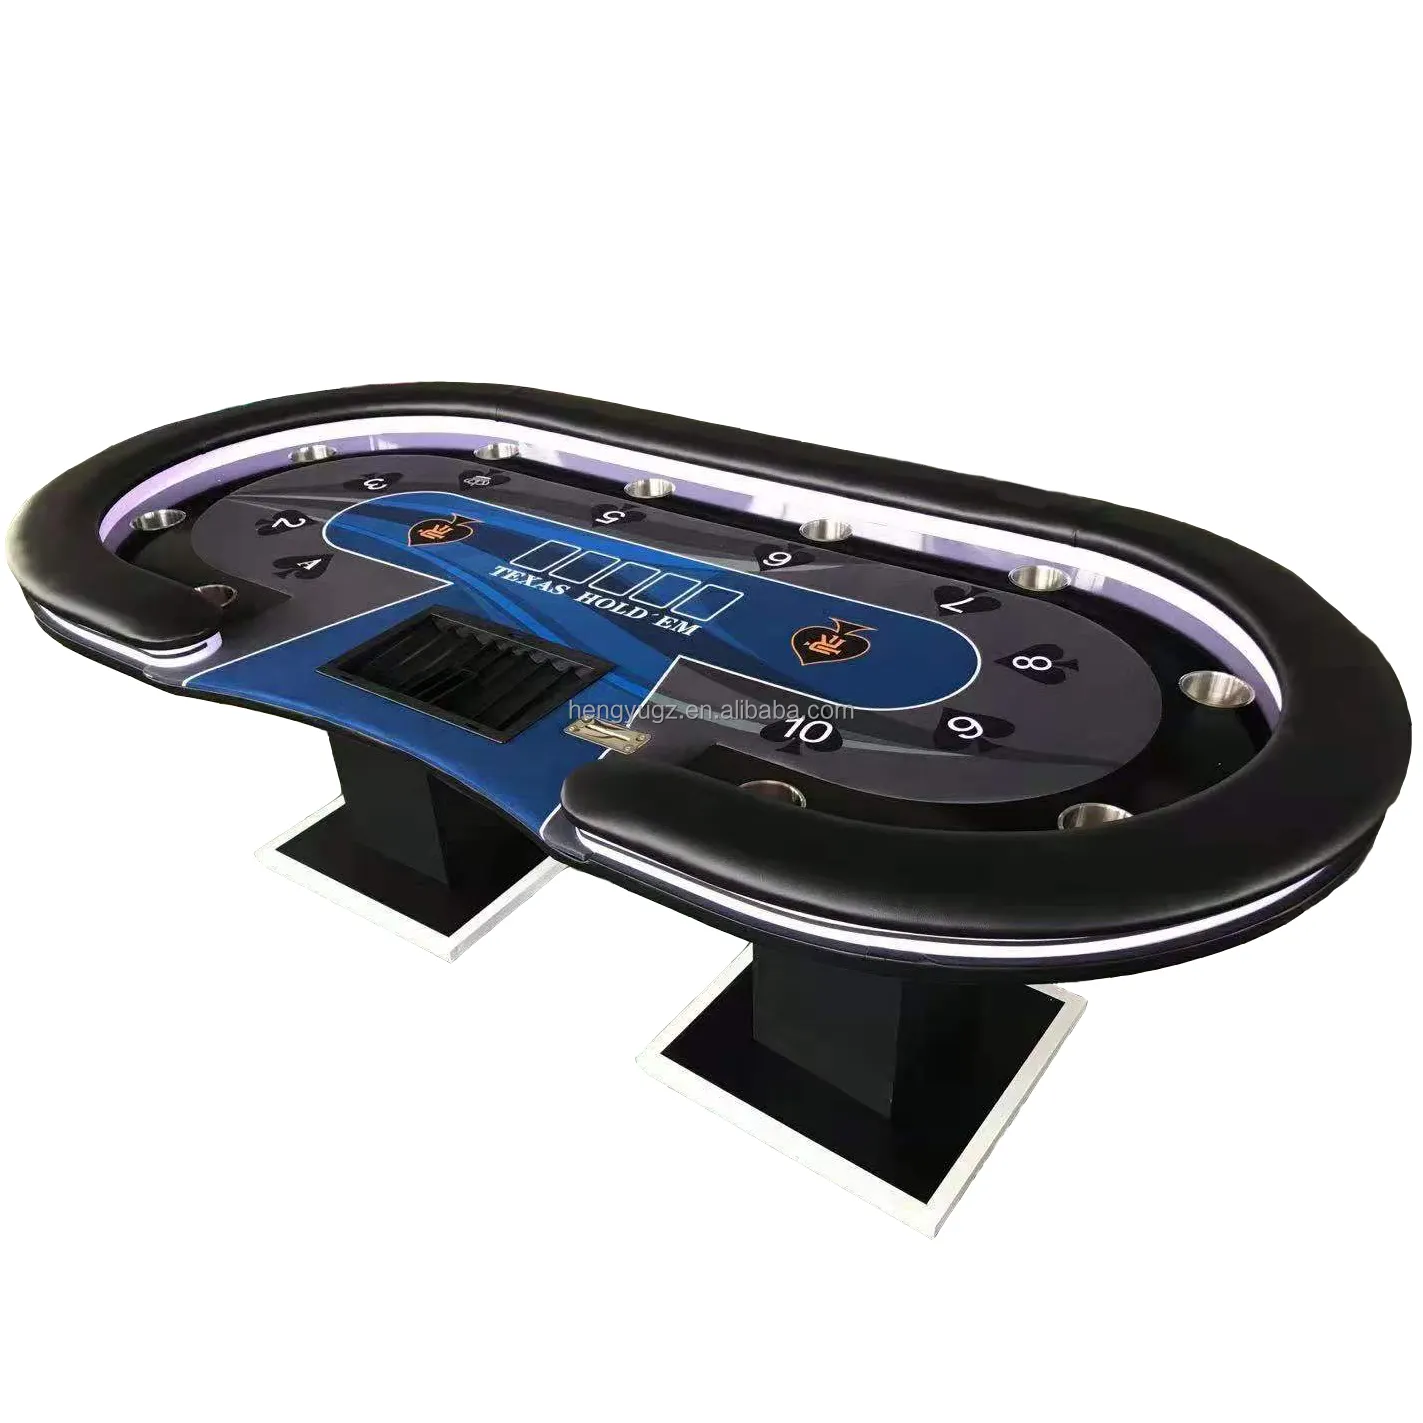 Toptan LED Poker masası Texas Hold em poker klasik tasarlanmış özel 10 koltuk Poker kumar masa